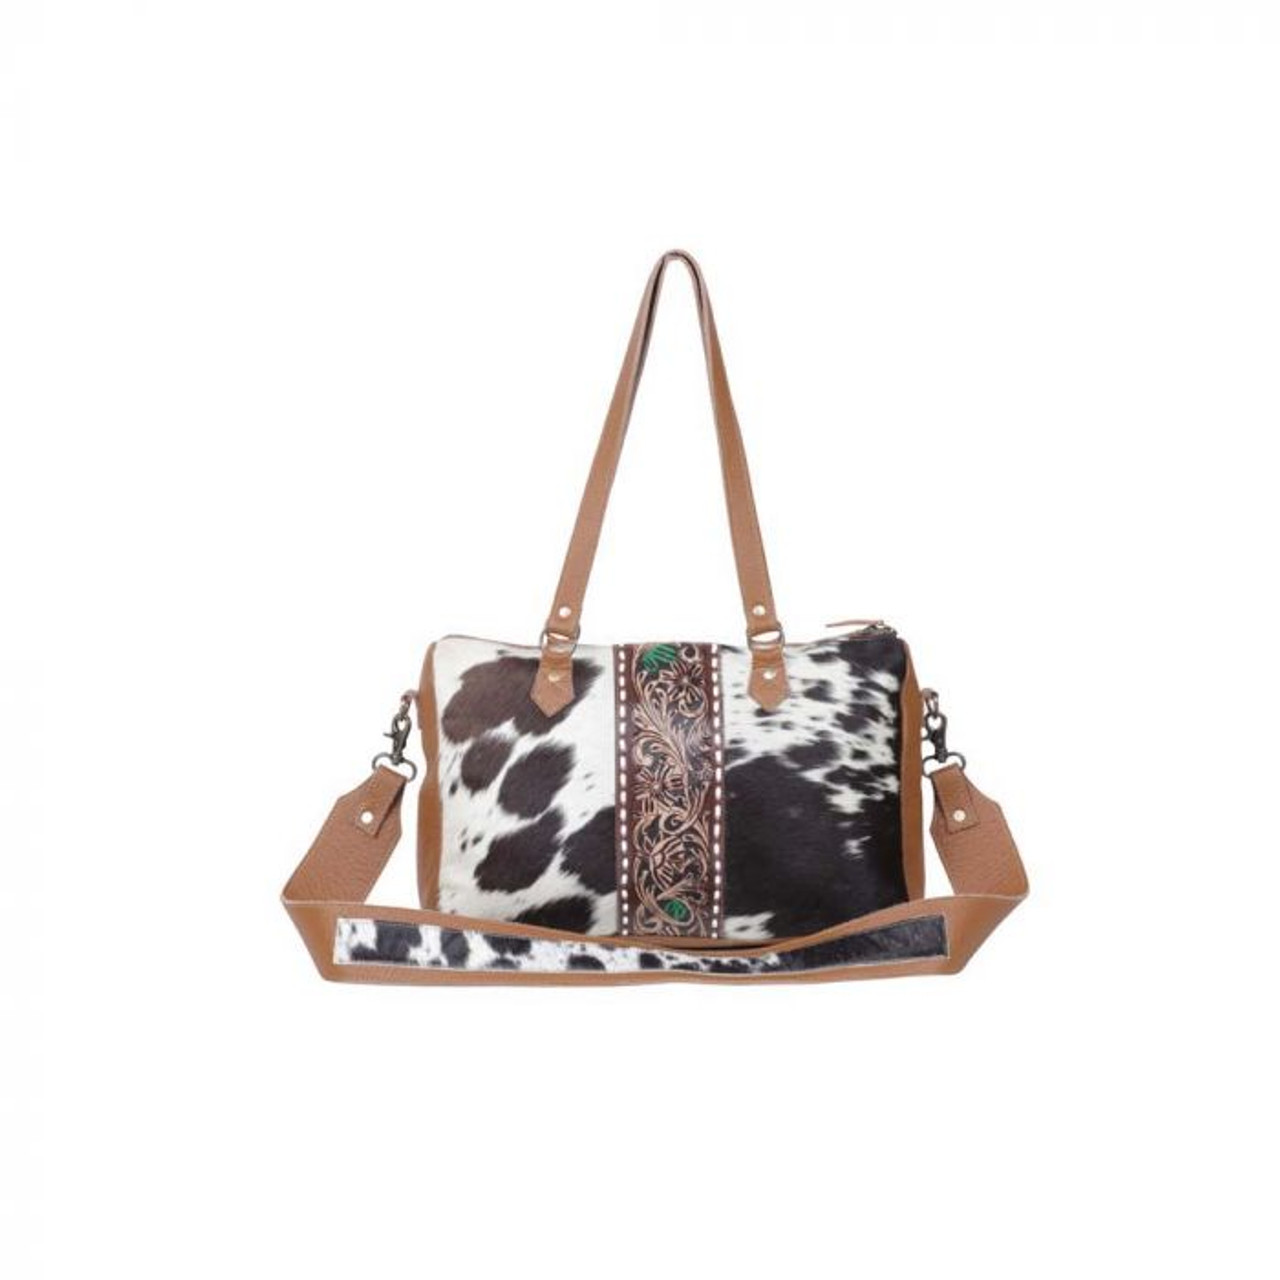 Louis Vuitton bag waist bag cowhide brown bag sports bag shoulder